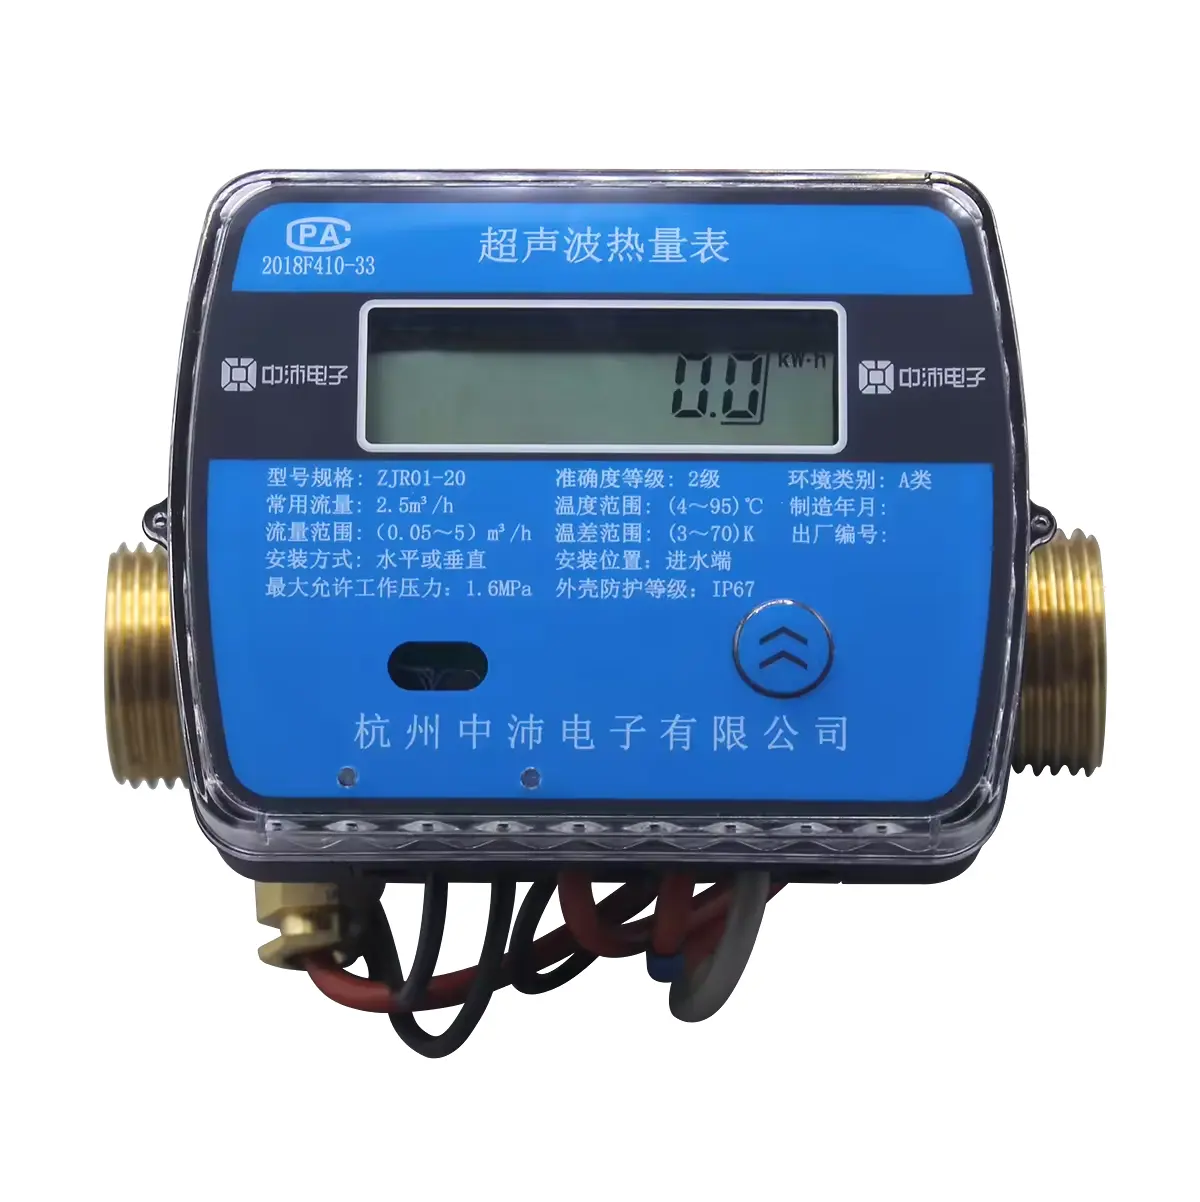 BTU high precision measurement digital ultrasonic water flowmeter heat meter